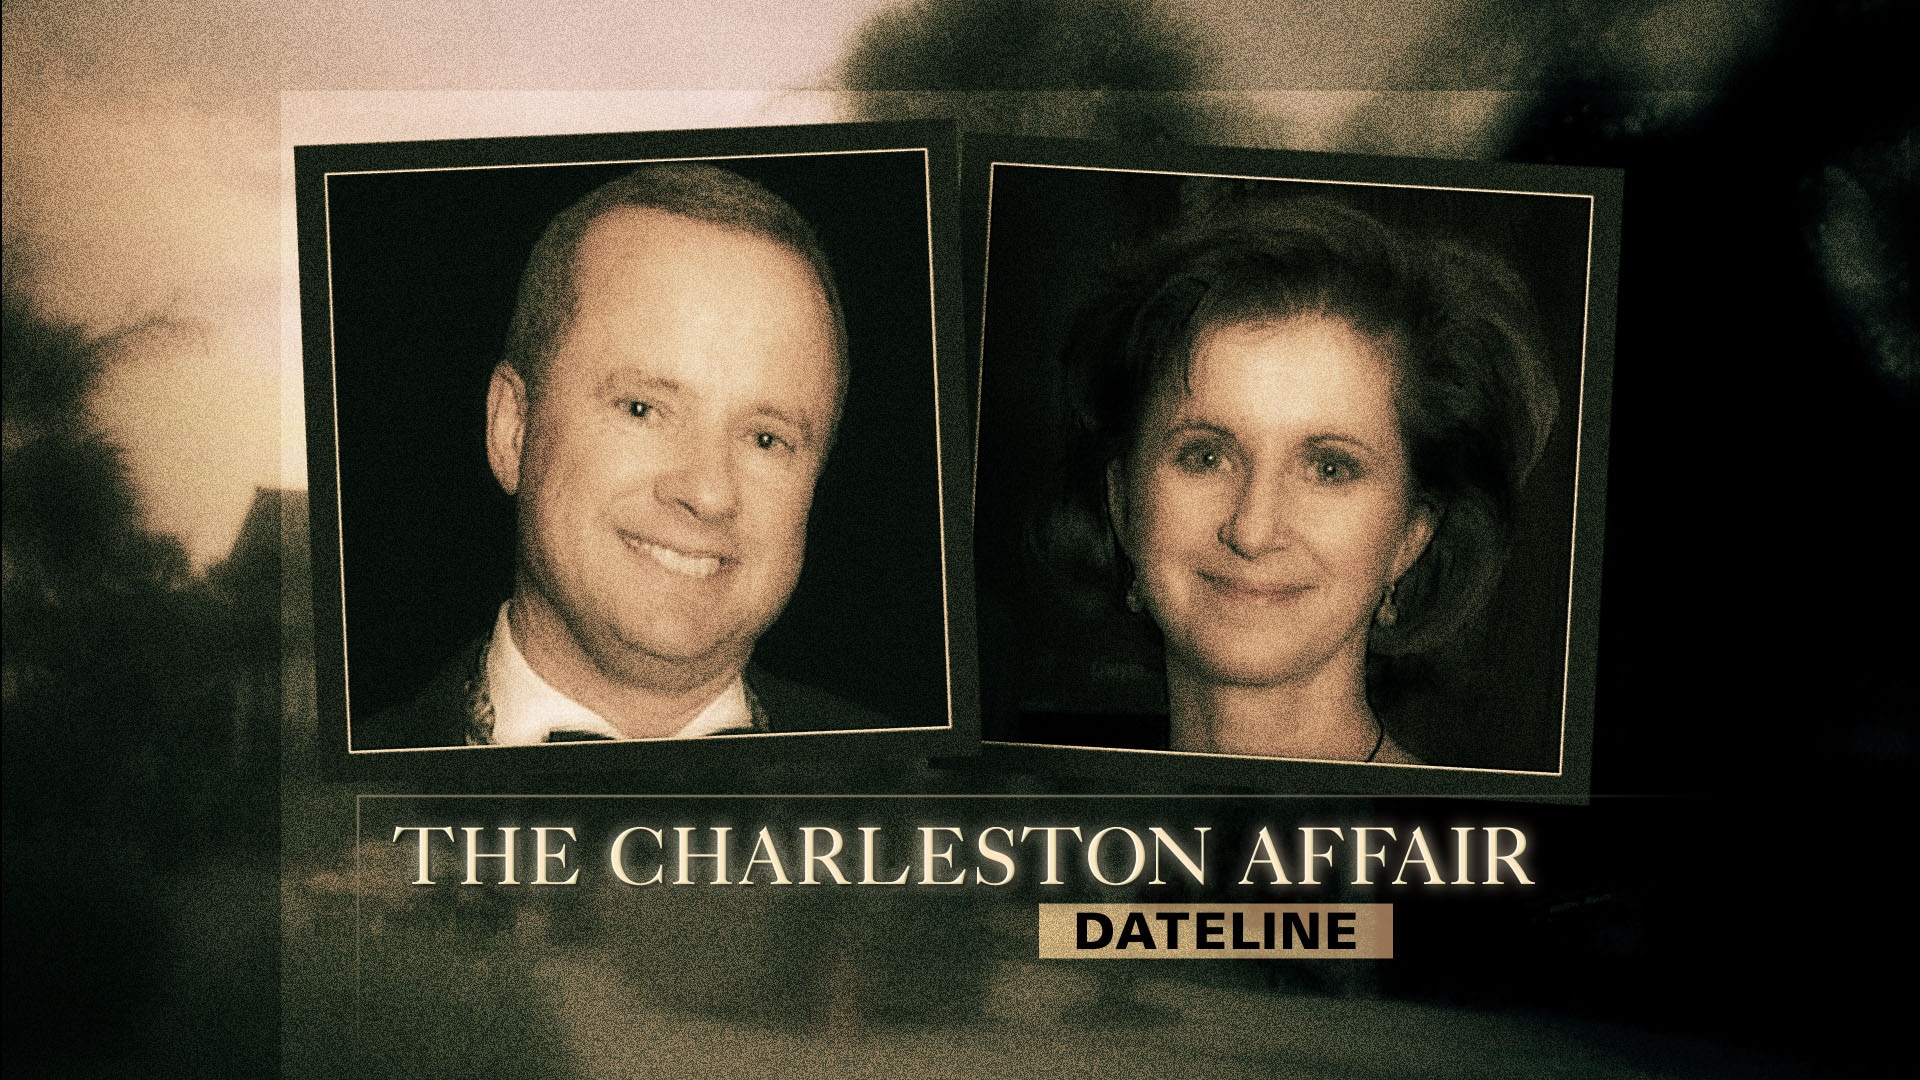 Watch Dateline Episode: The Charleston Affair - NBC.com.